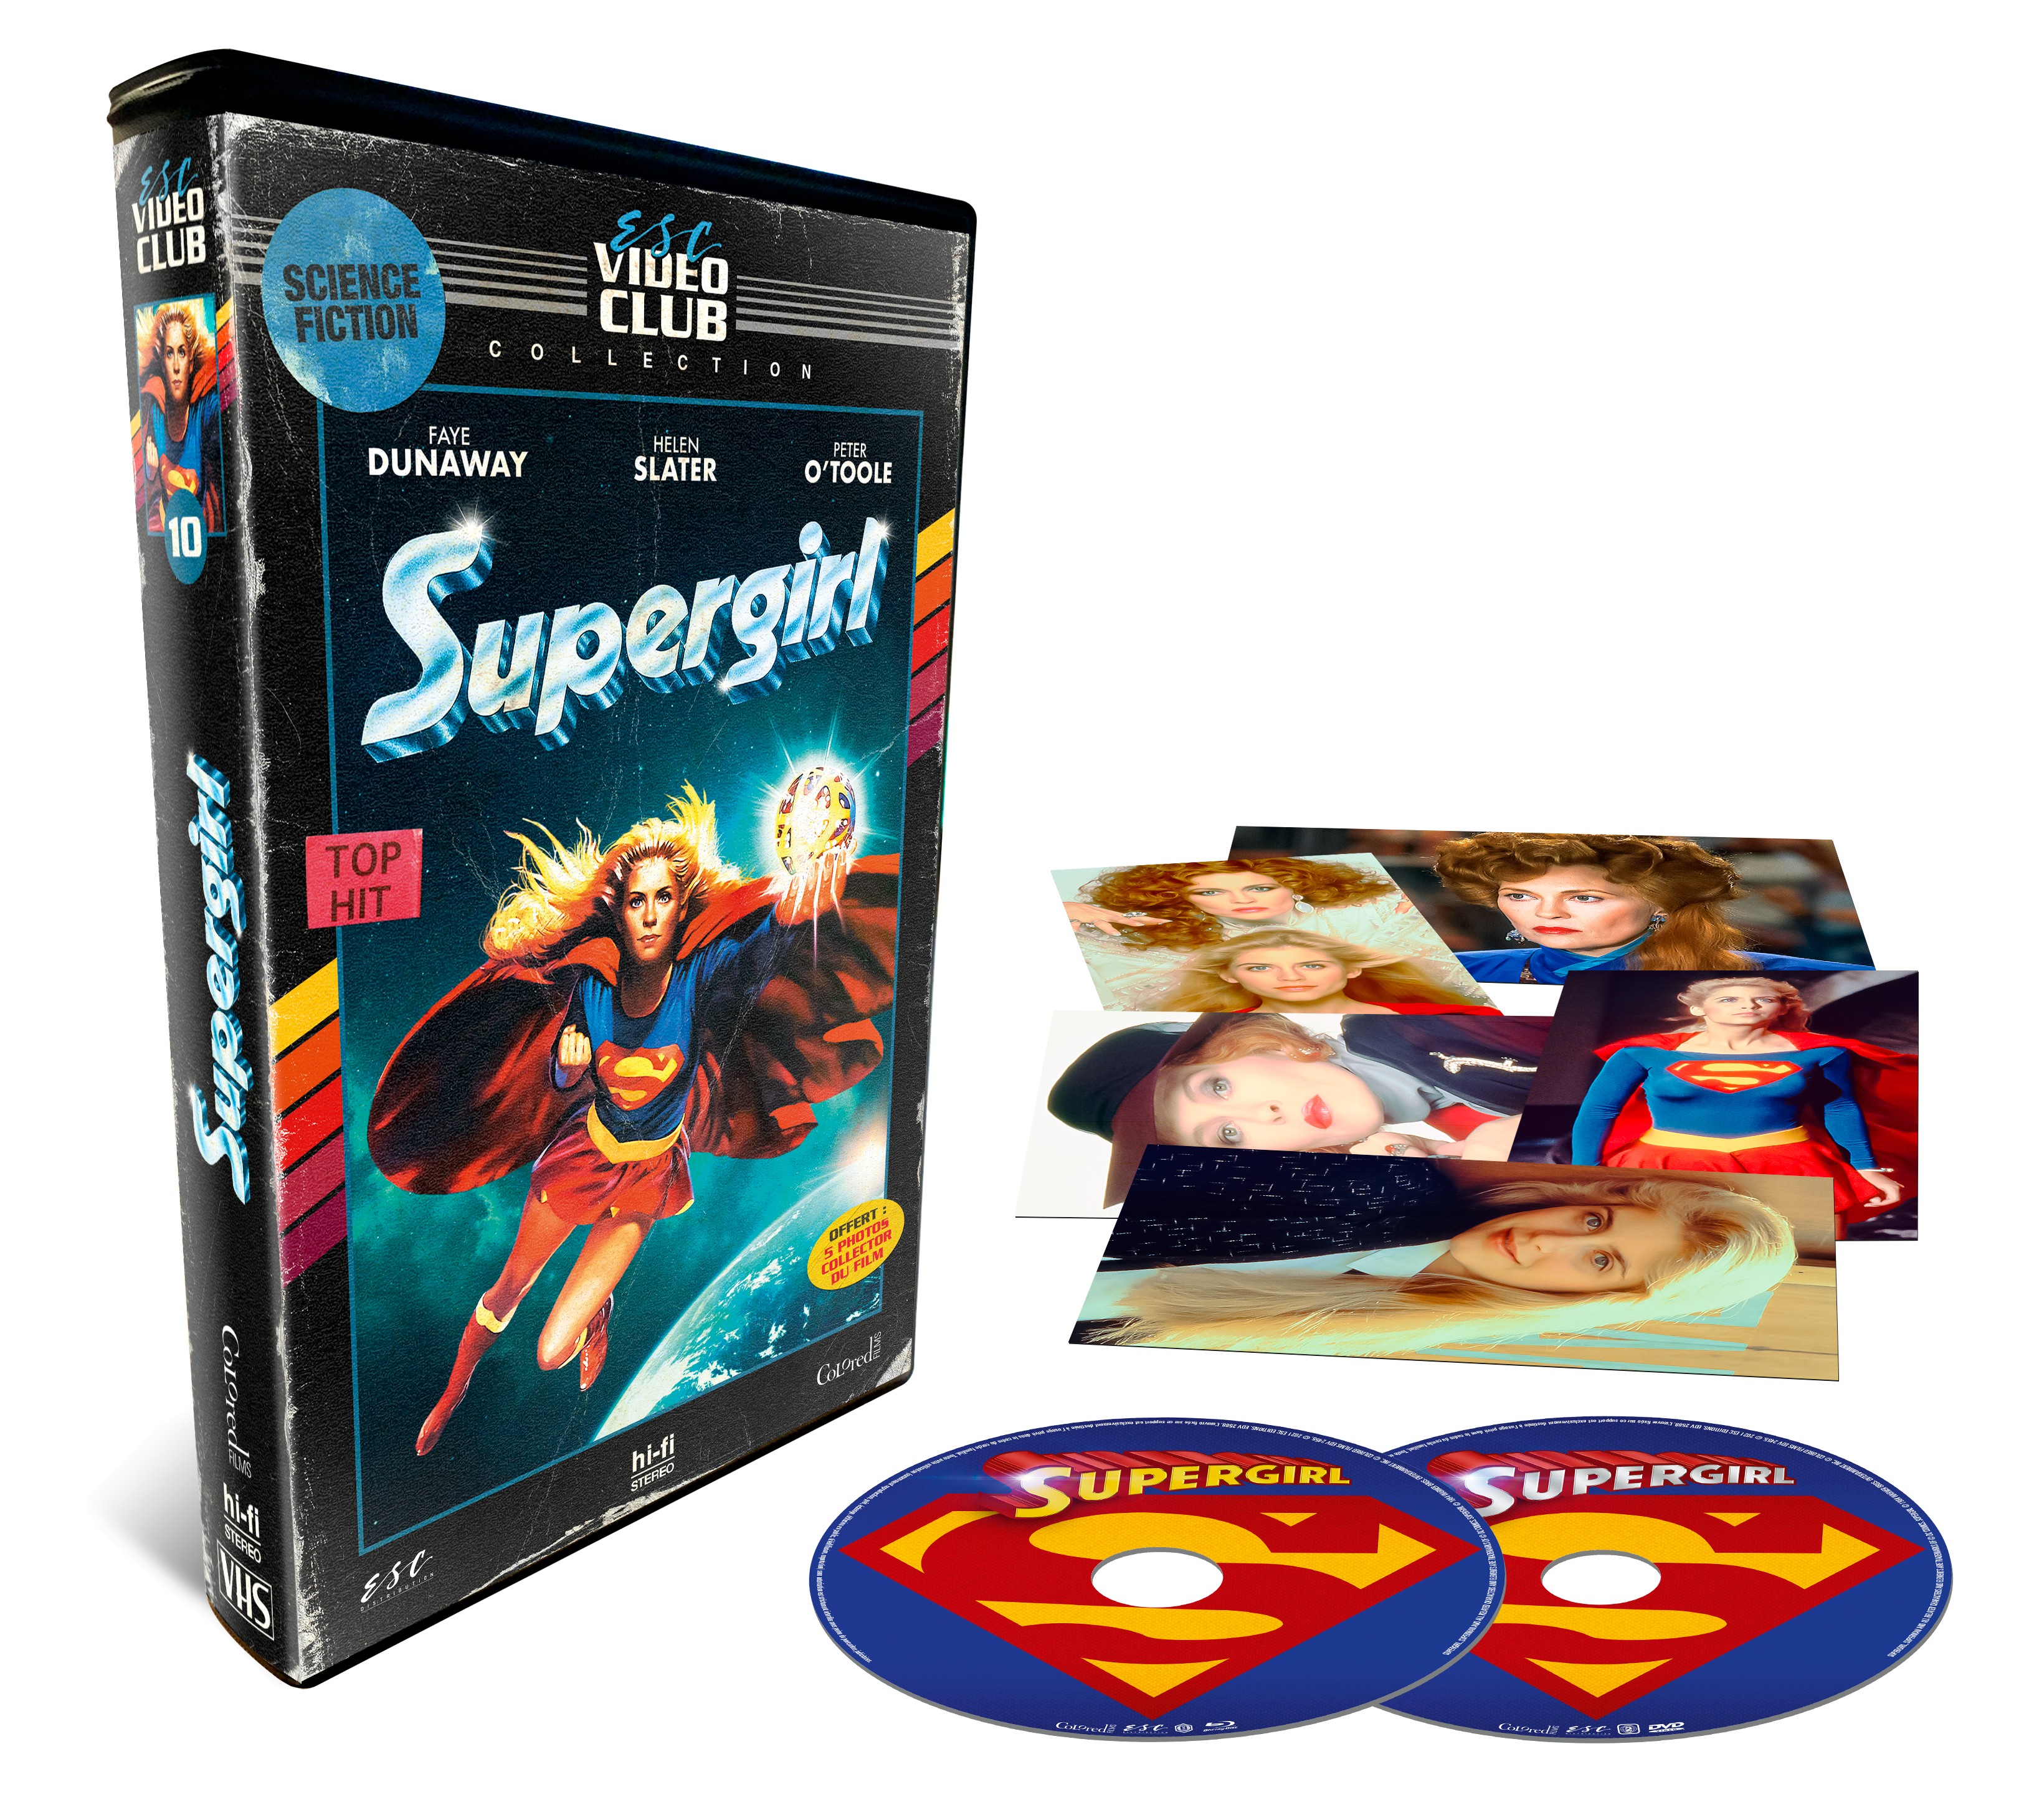  SUPERGIRL_VHS VIDEO CLUB_3D